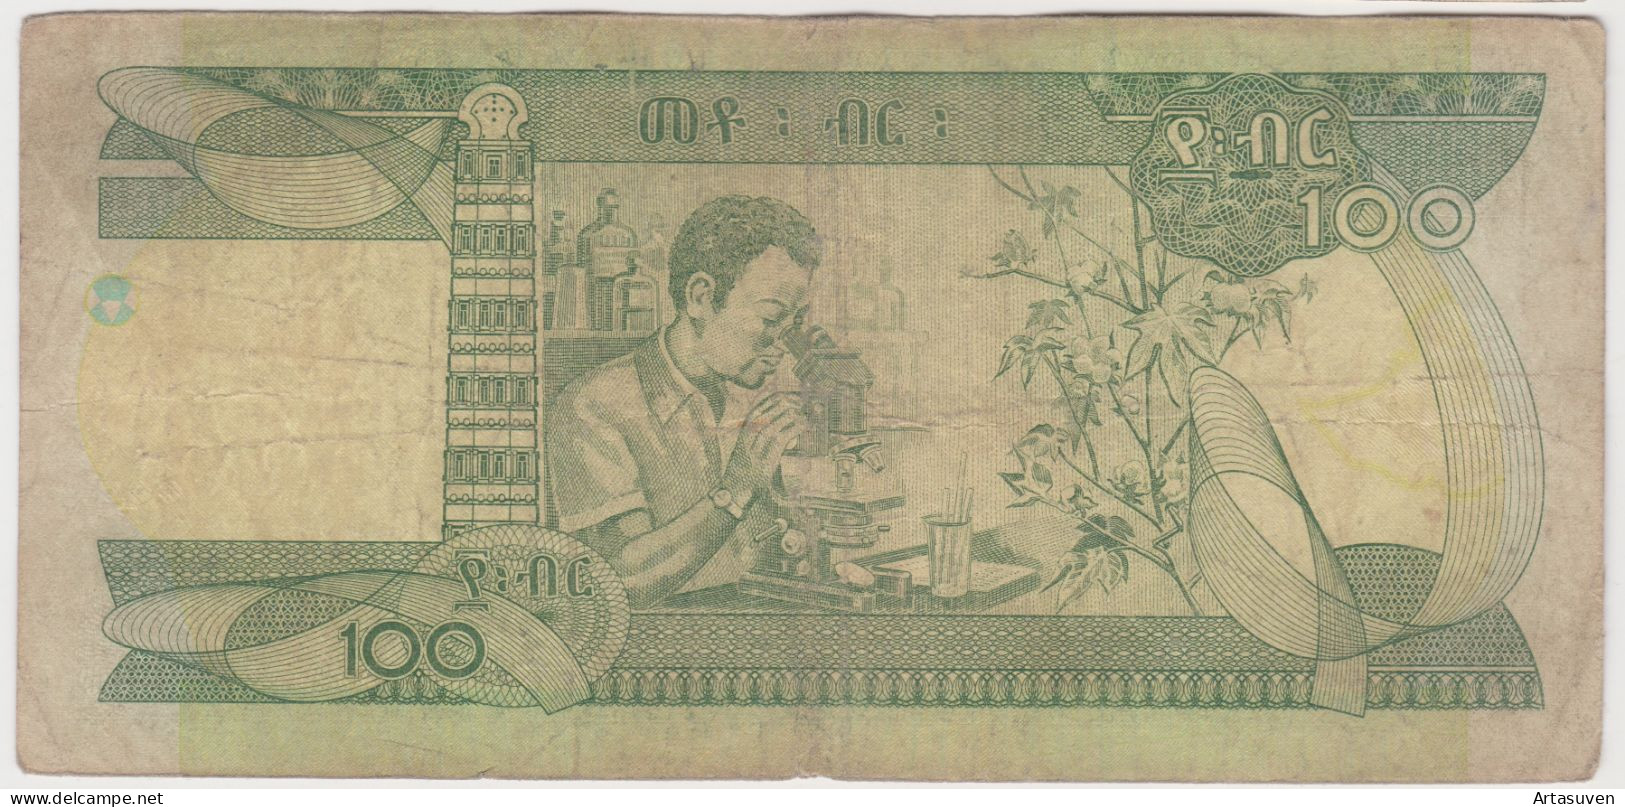 Ethiopia 100 Birr 2007-2015 PICK-52 F / VG Africa Paper Money, Banknote - Ethiopie